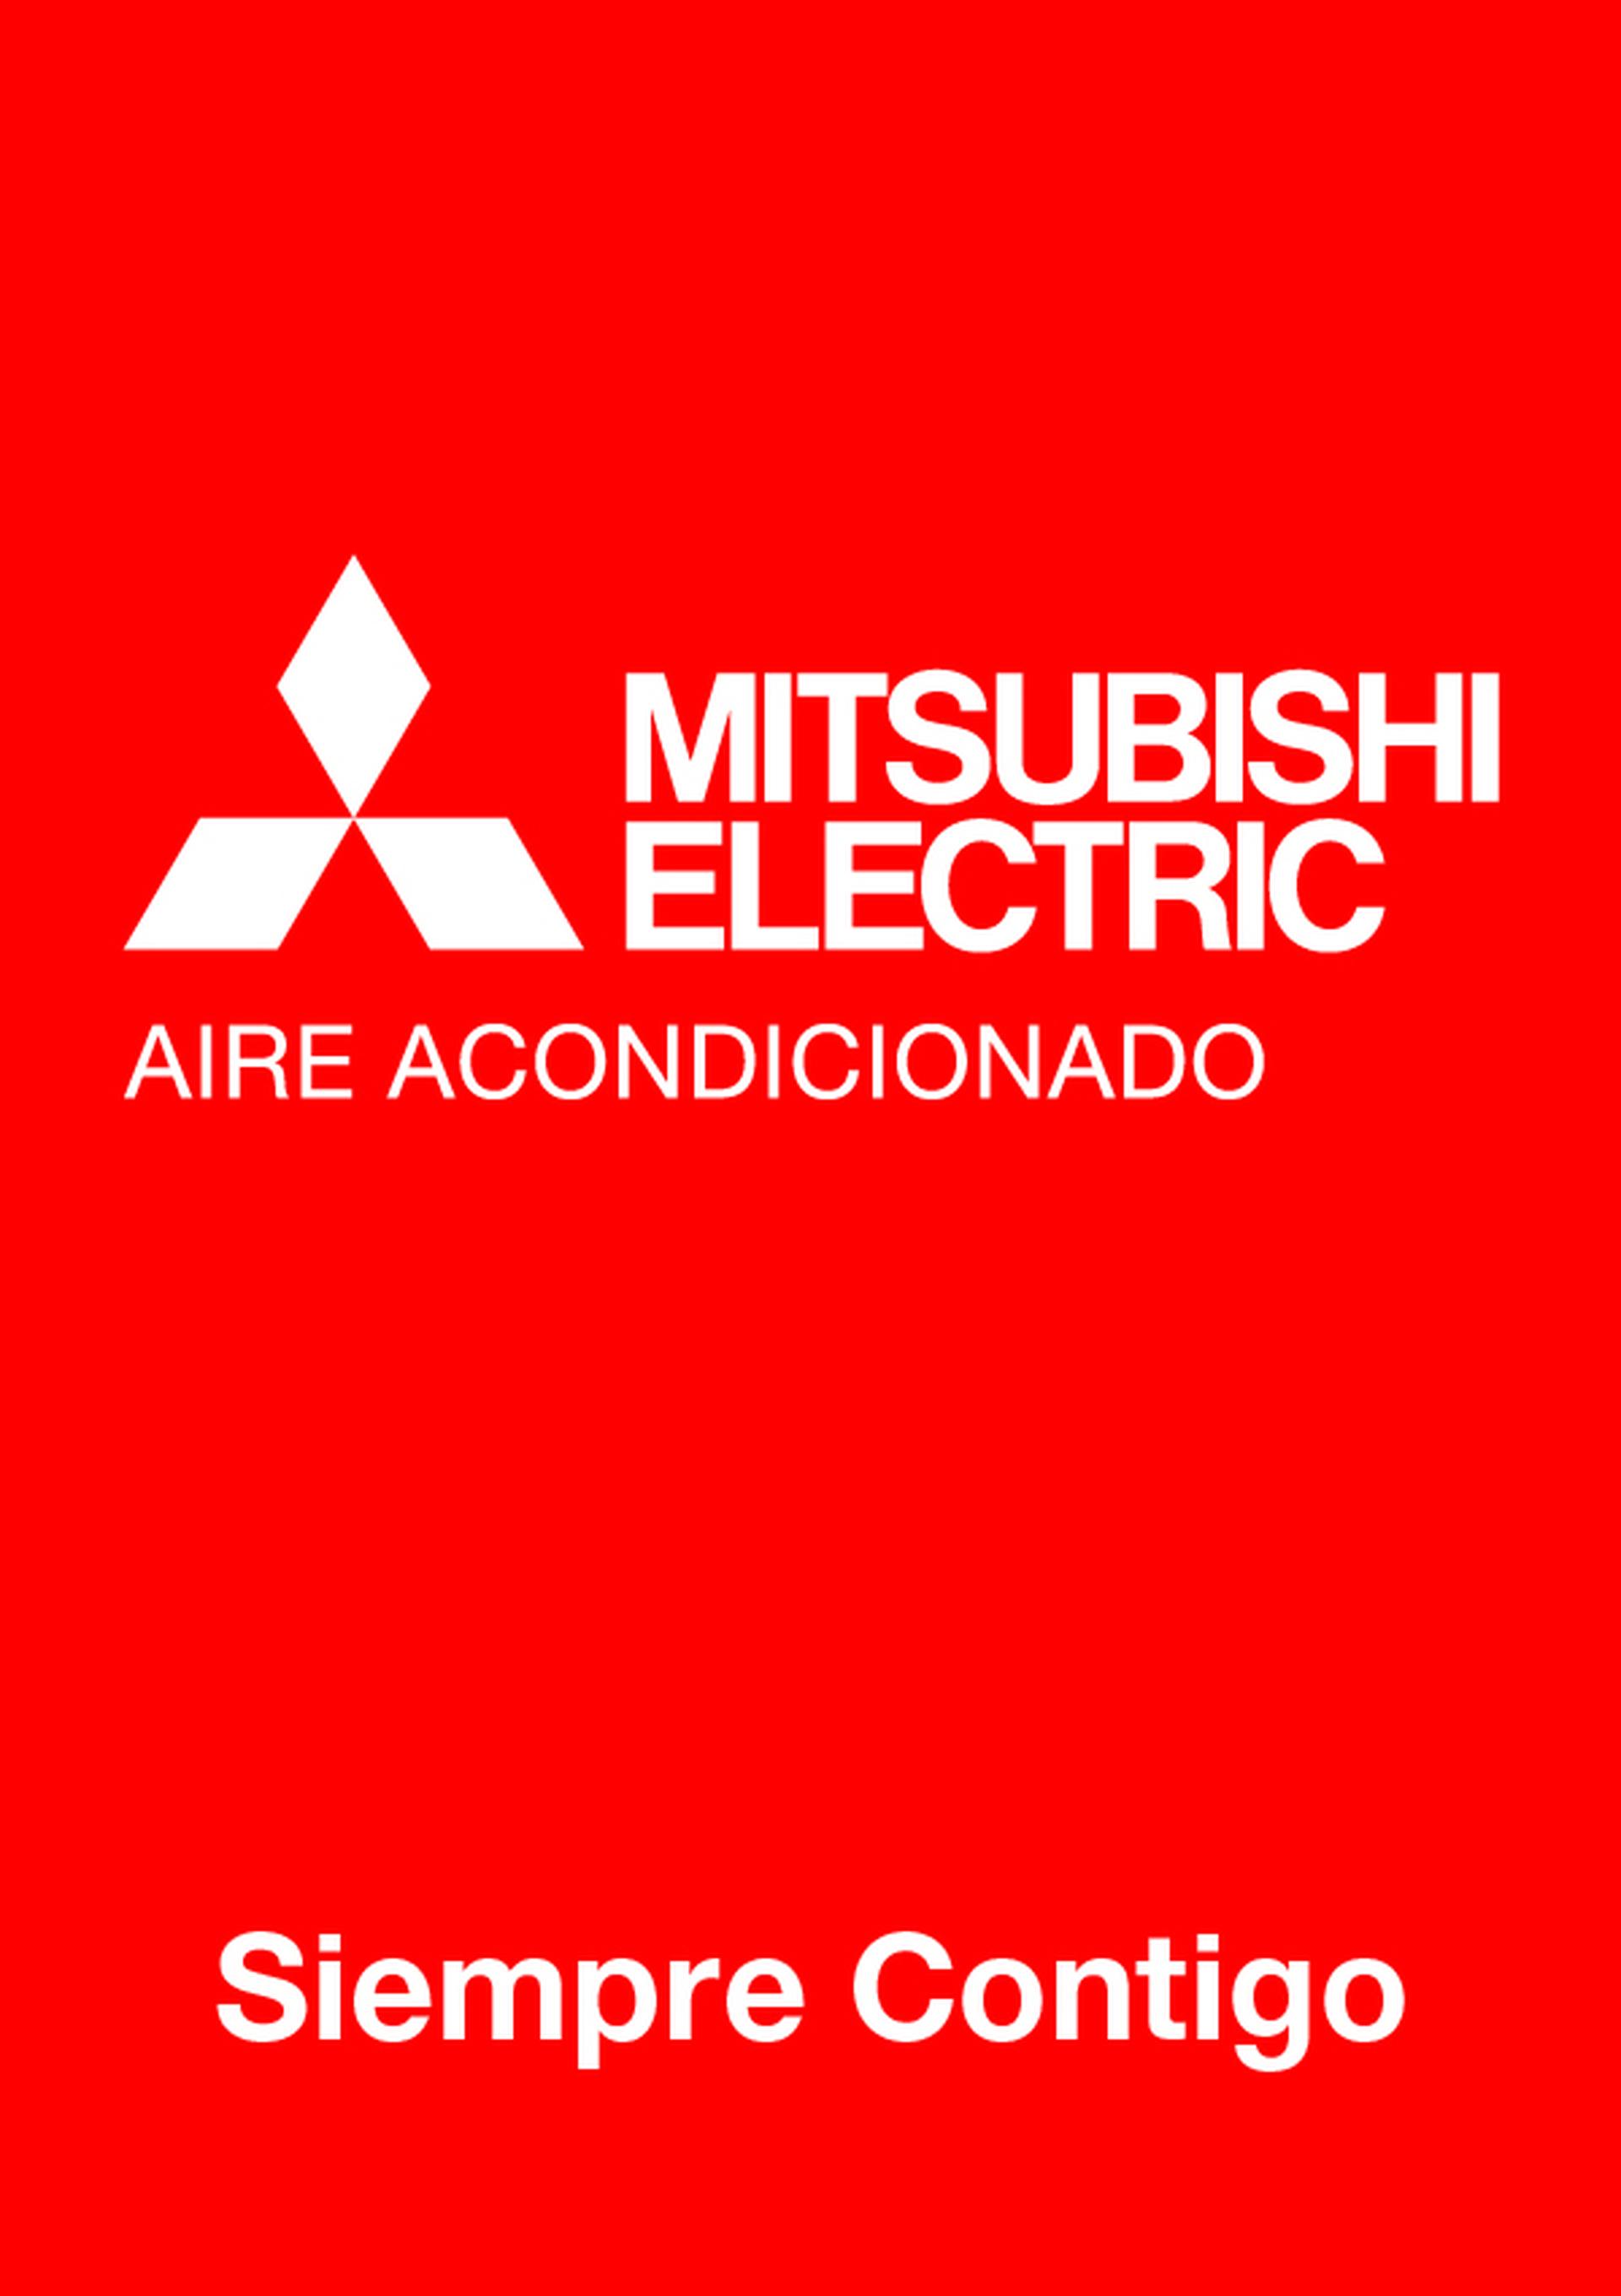 Mitsubishi mobile